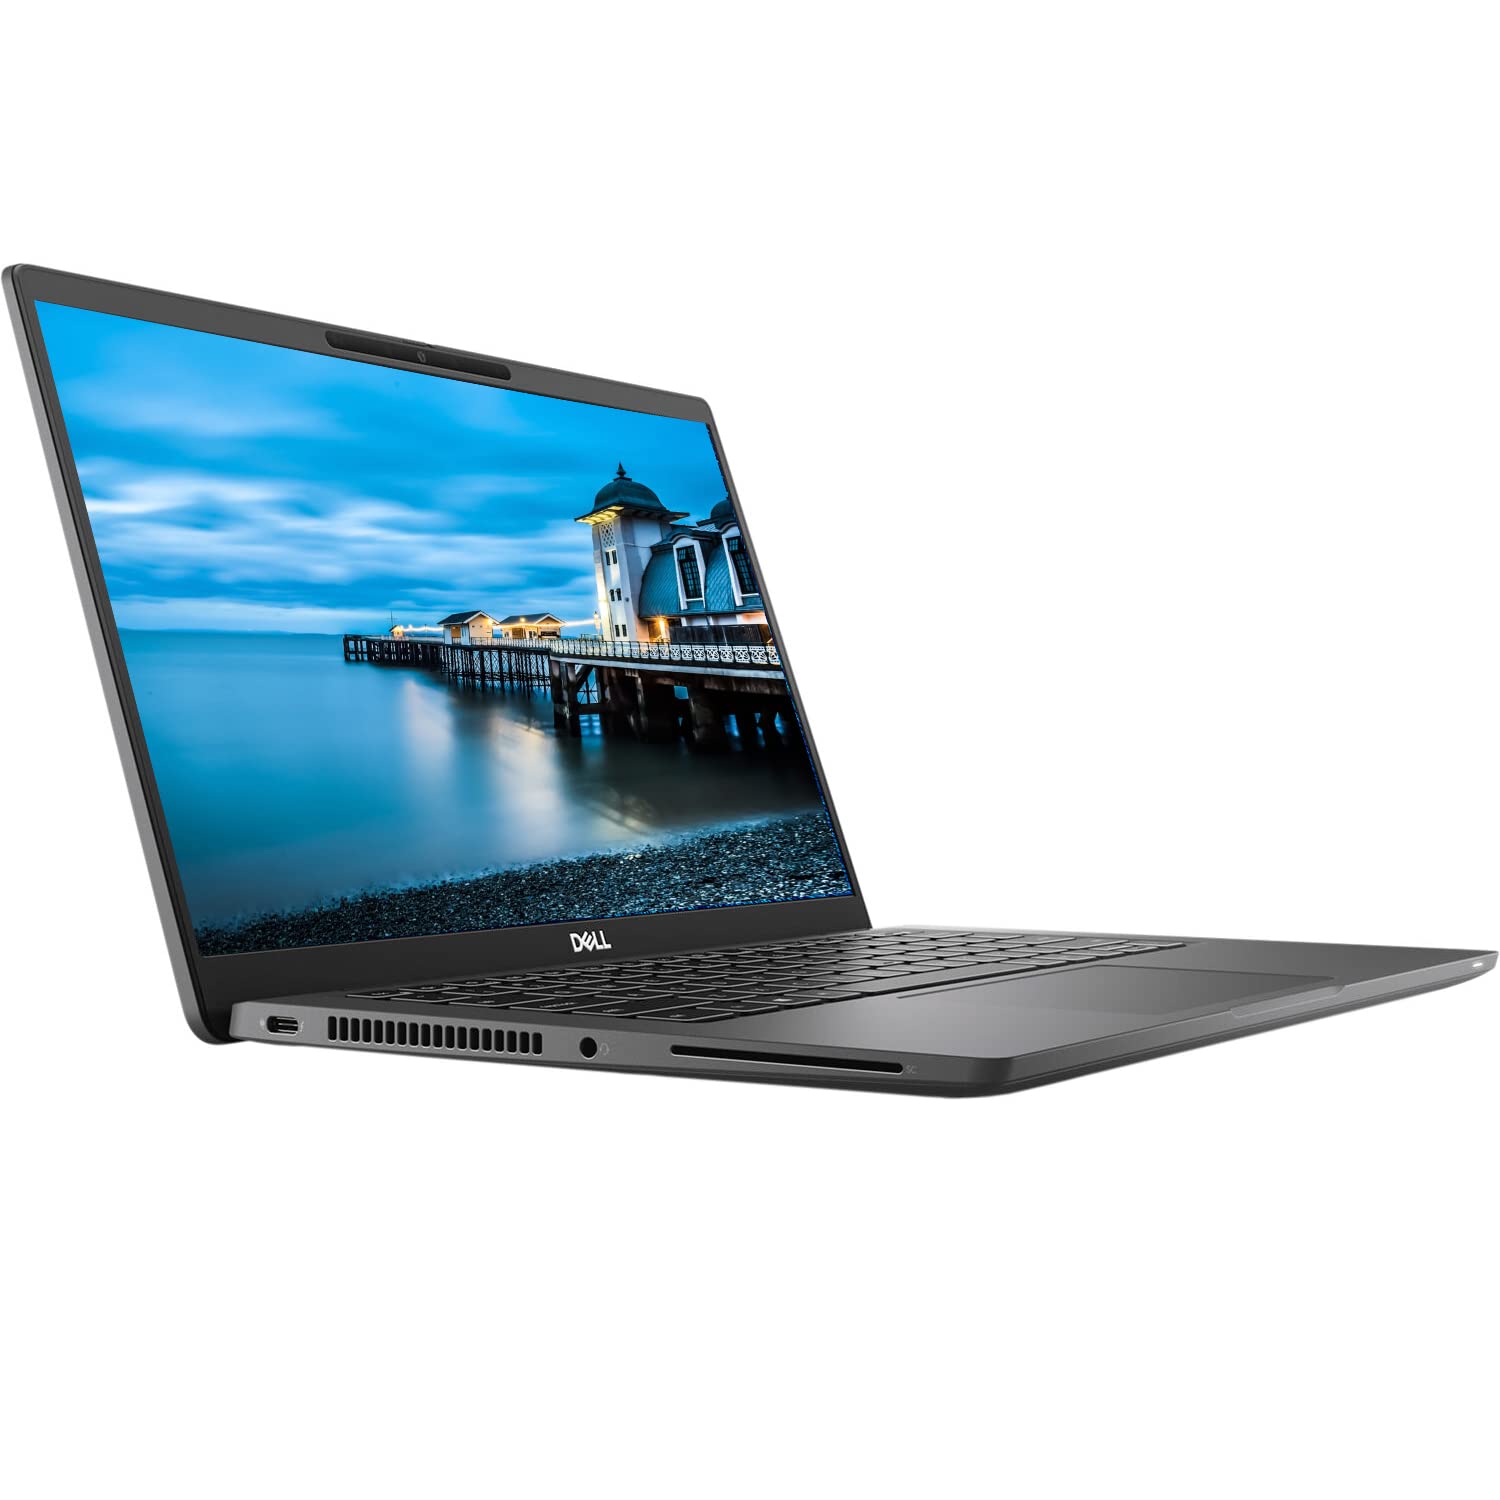 Dell Latitude 7300 Laptop PC Intel Core i5-8365U Processor 8GB Ram 256GB NVMe SSD WiFi Bluetooth Webcam Windows 10 Pro (Renewed)